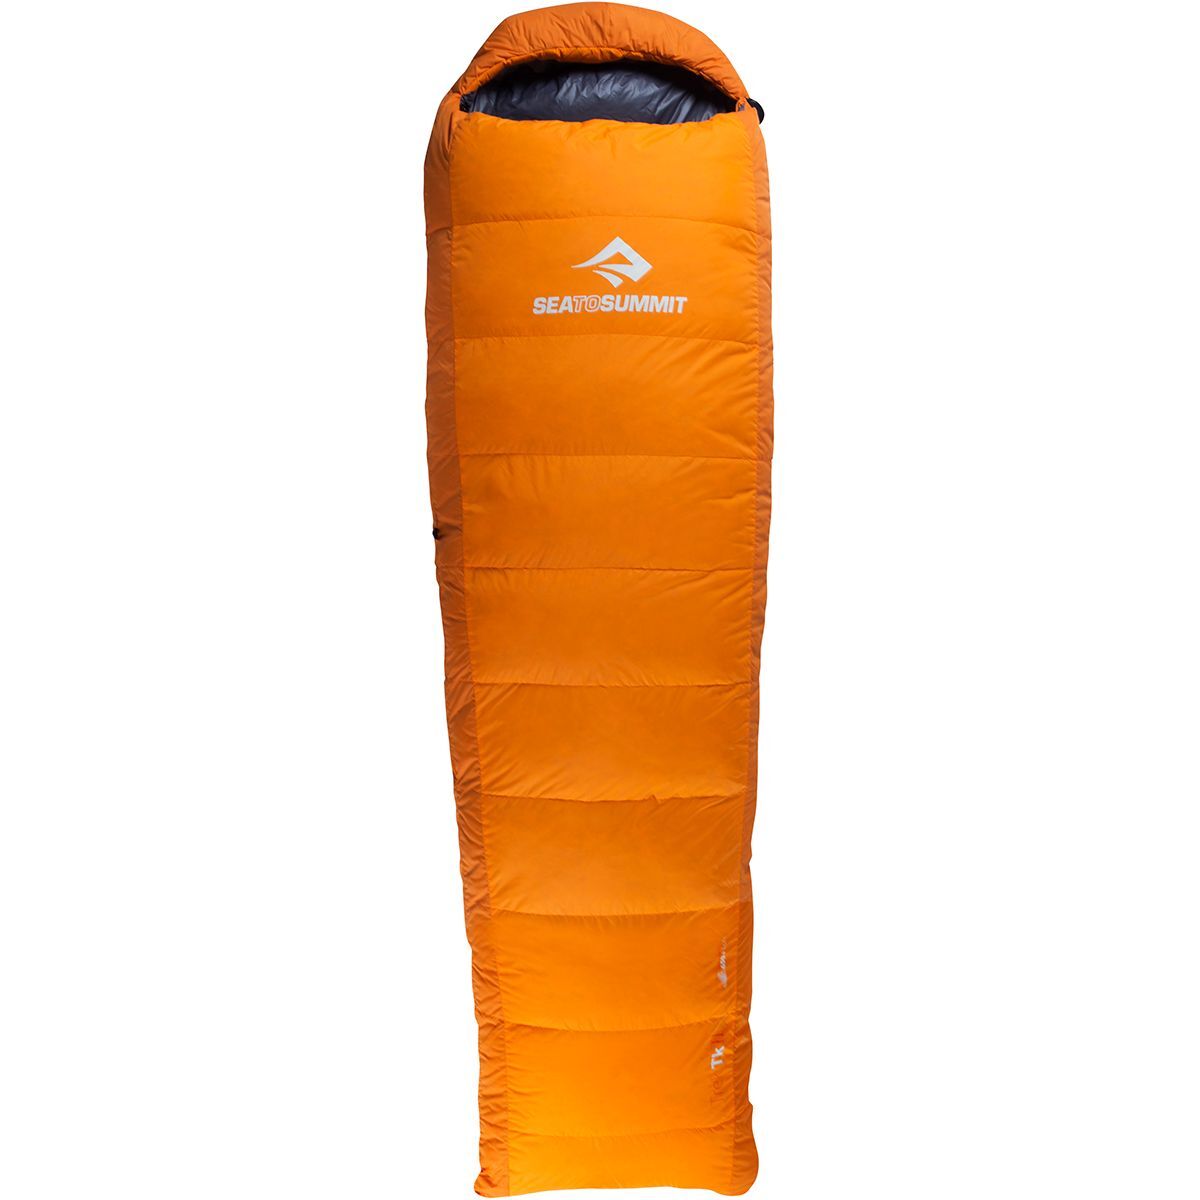 Travel Essentials - Sea to Summit Trek TkII Sleeping Bag- Light Weight--Down